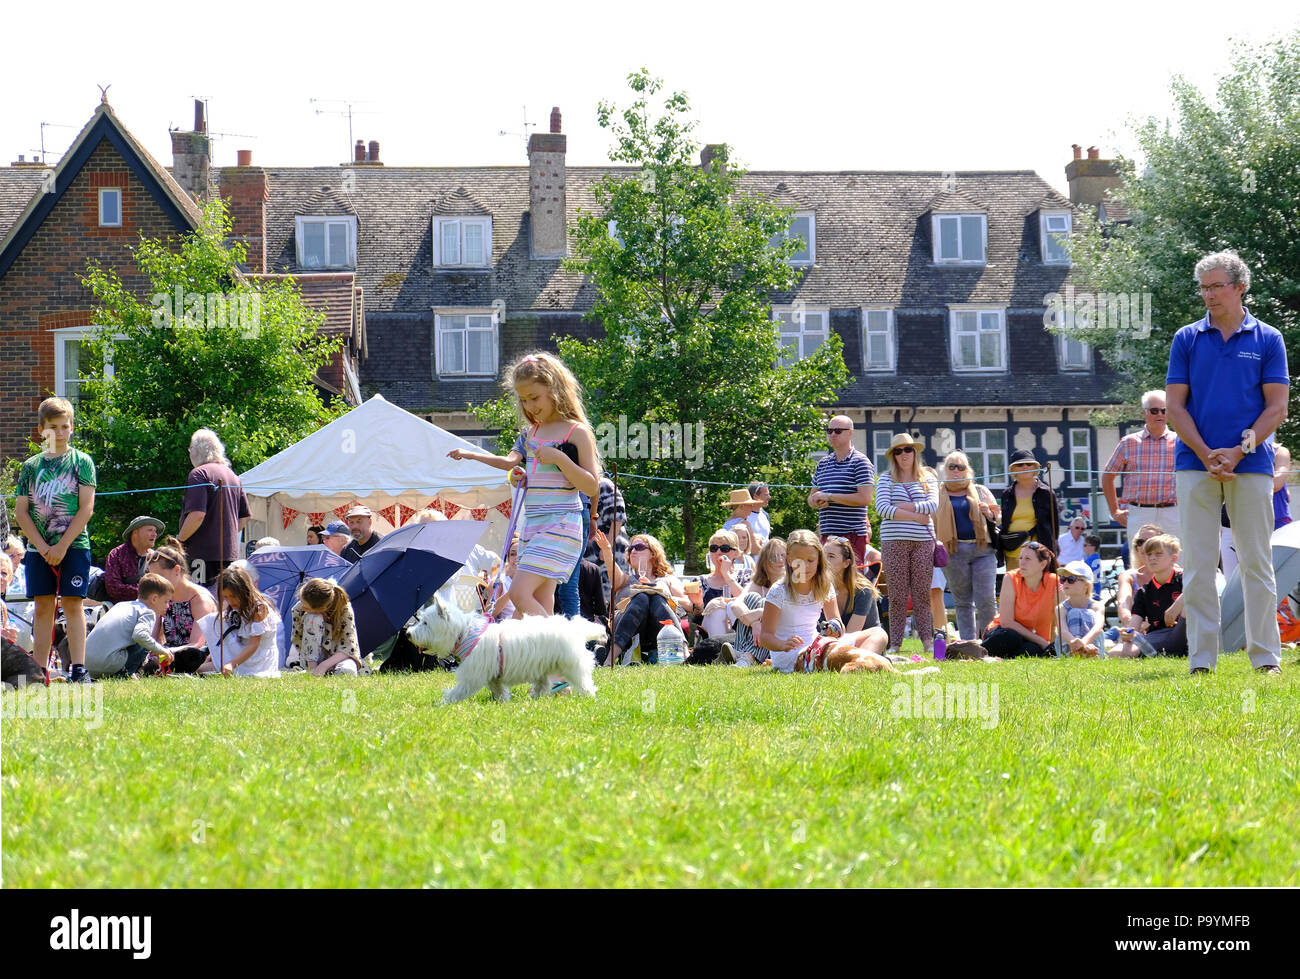 East Preston, West Sussex, UK. Fun dog show held on village green Stock Photo